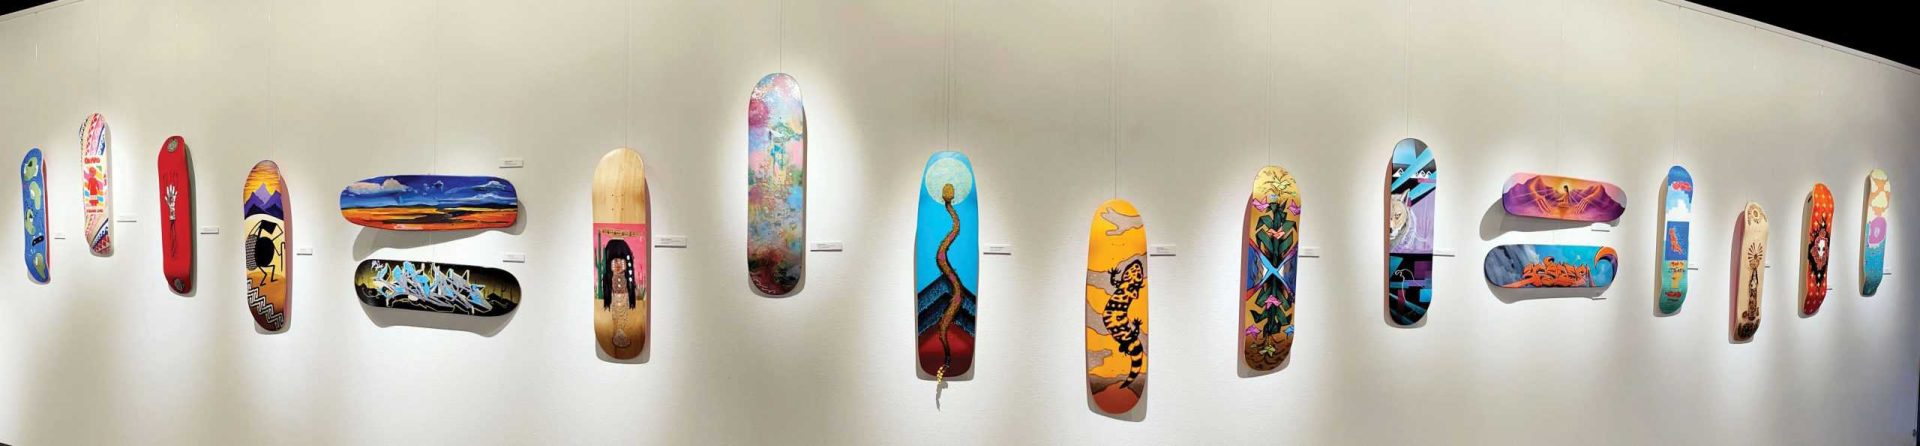 Community Artists Featured in ASU’s ArtSpace “Boardz and Arrowz” Exhibit